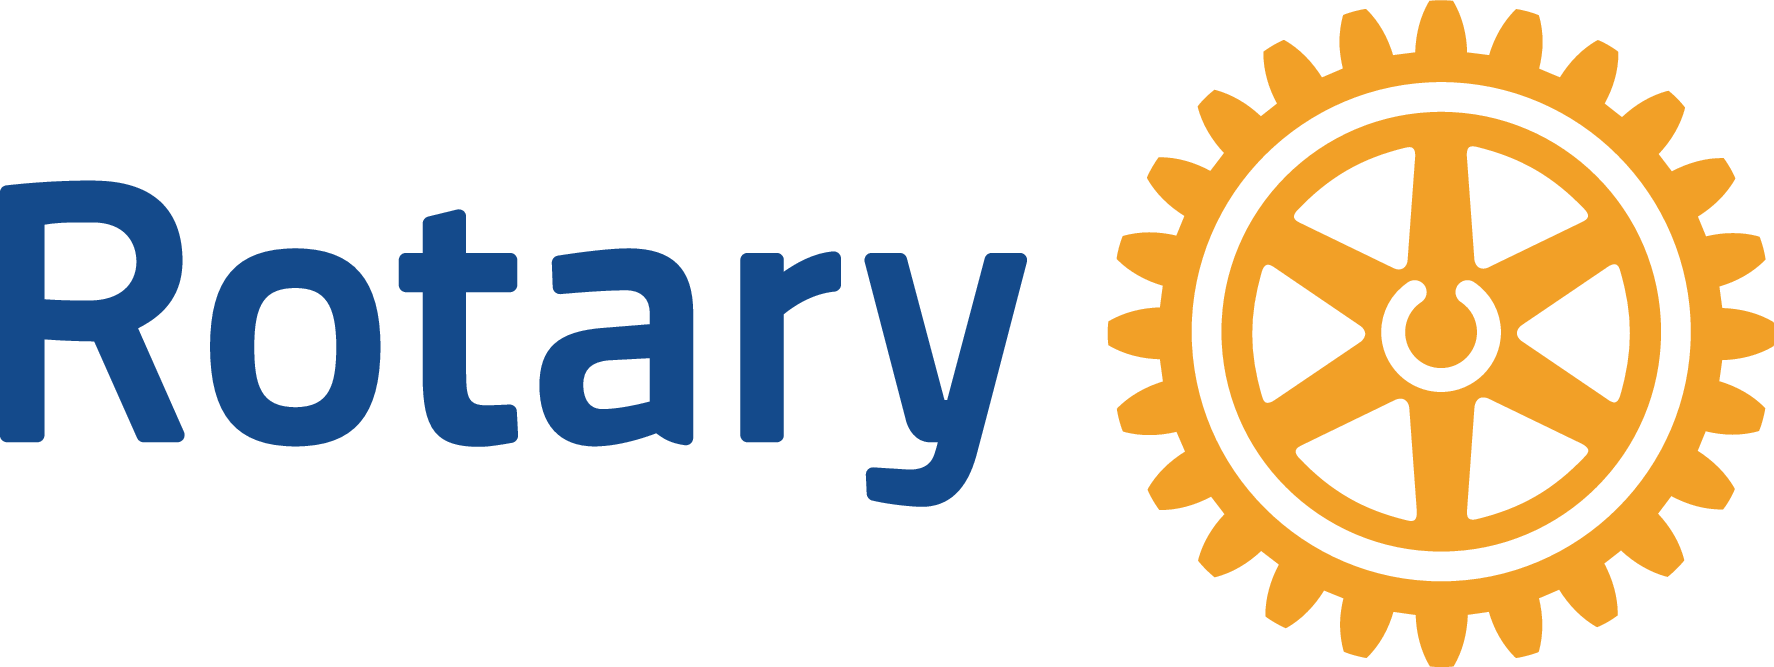 Rotary Congres